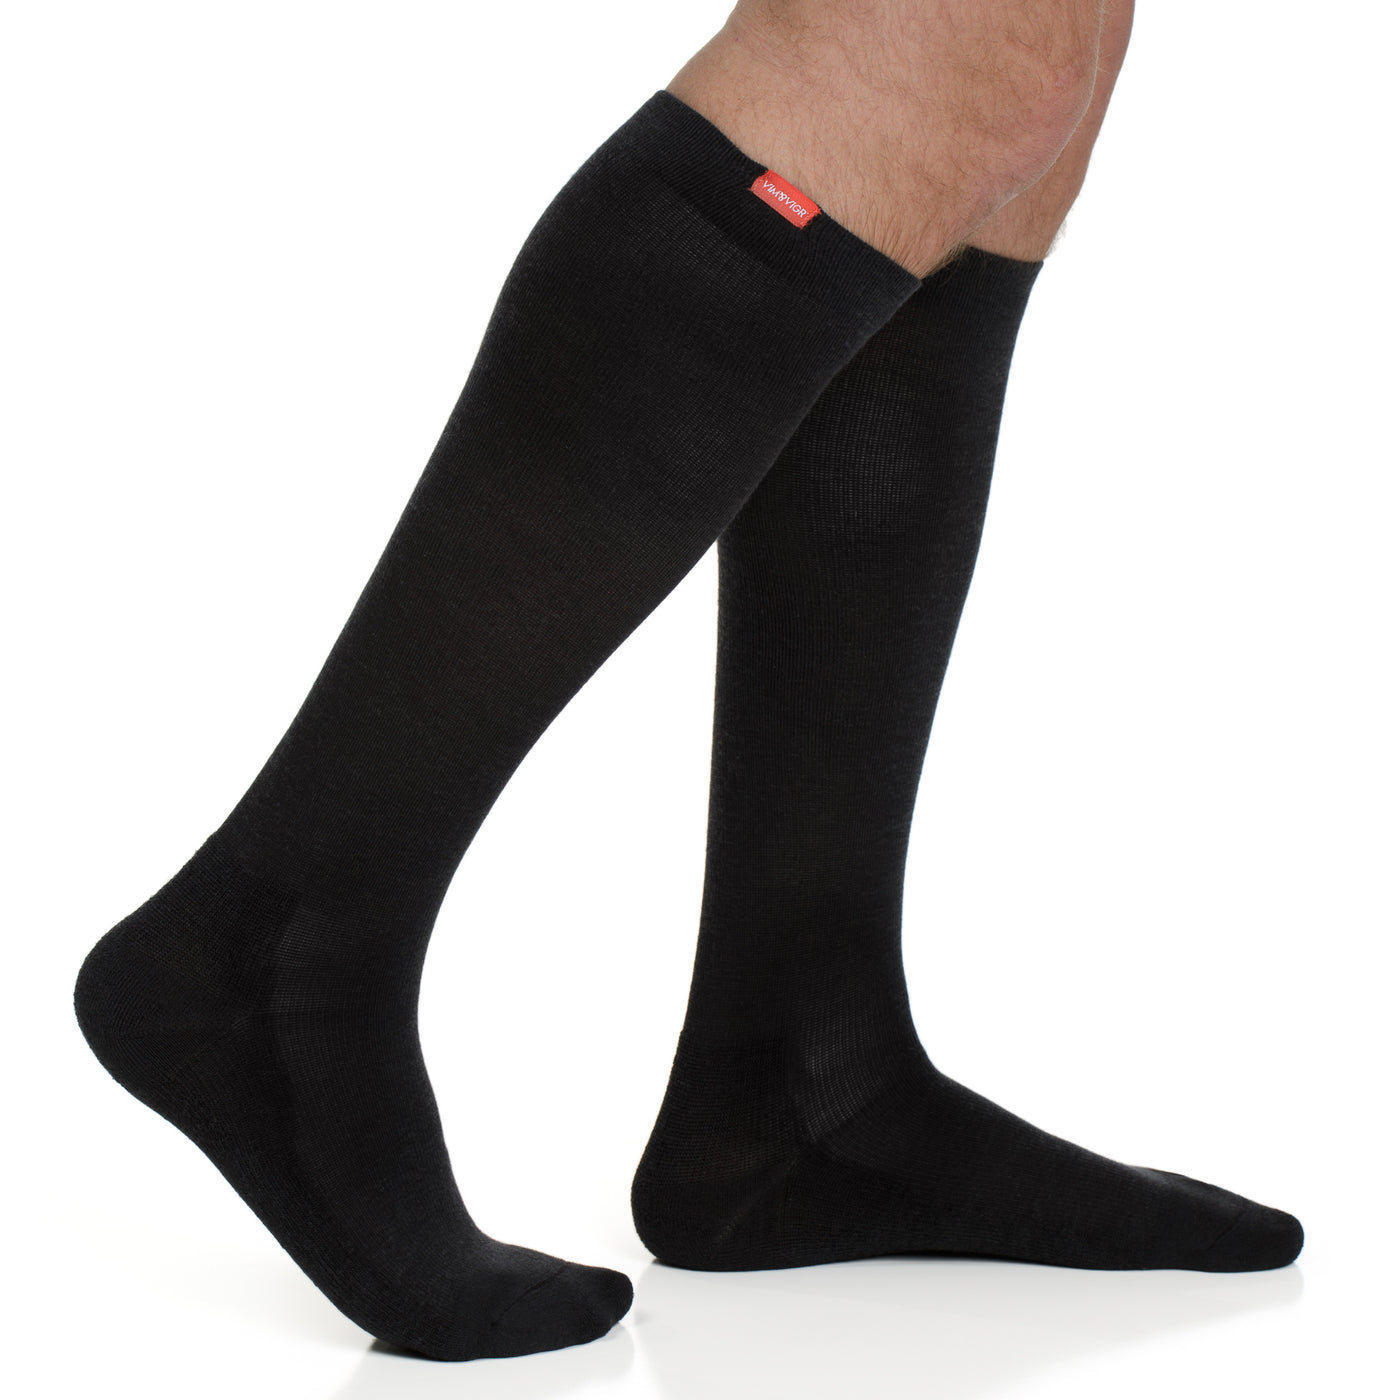 Medical-grade 20-30 mmHg: Solid Black (Moisture-wick Nylon) compression socks